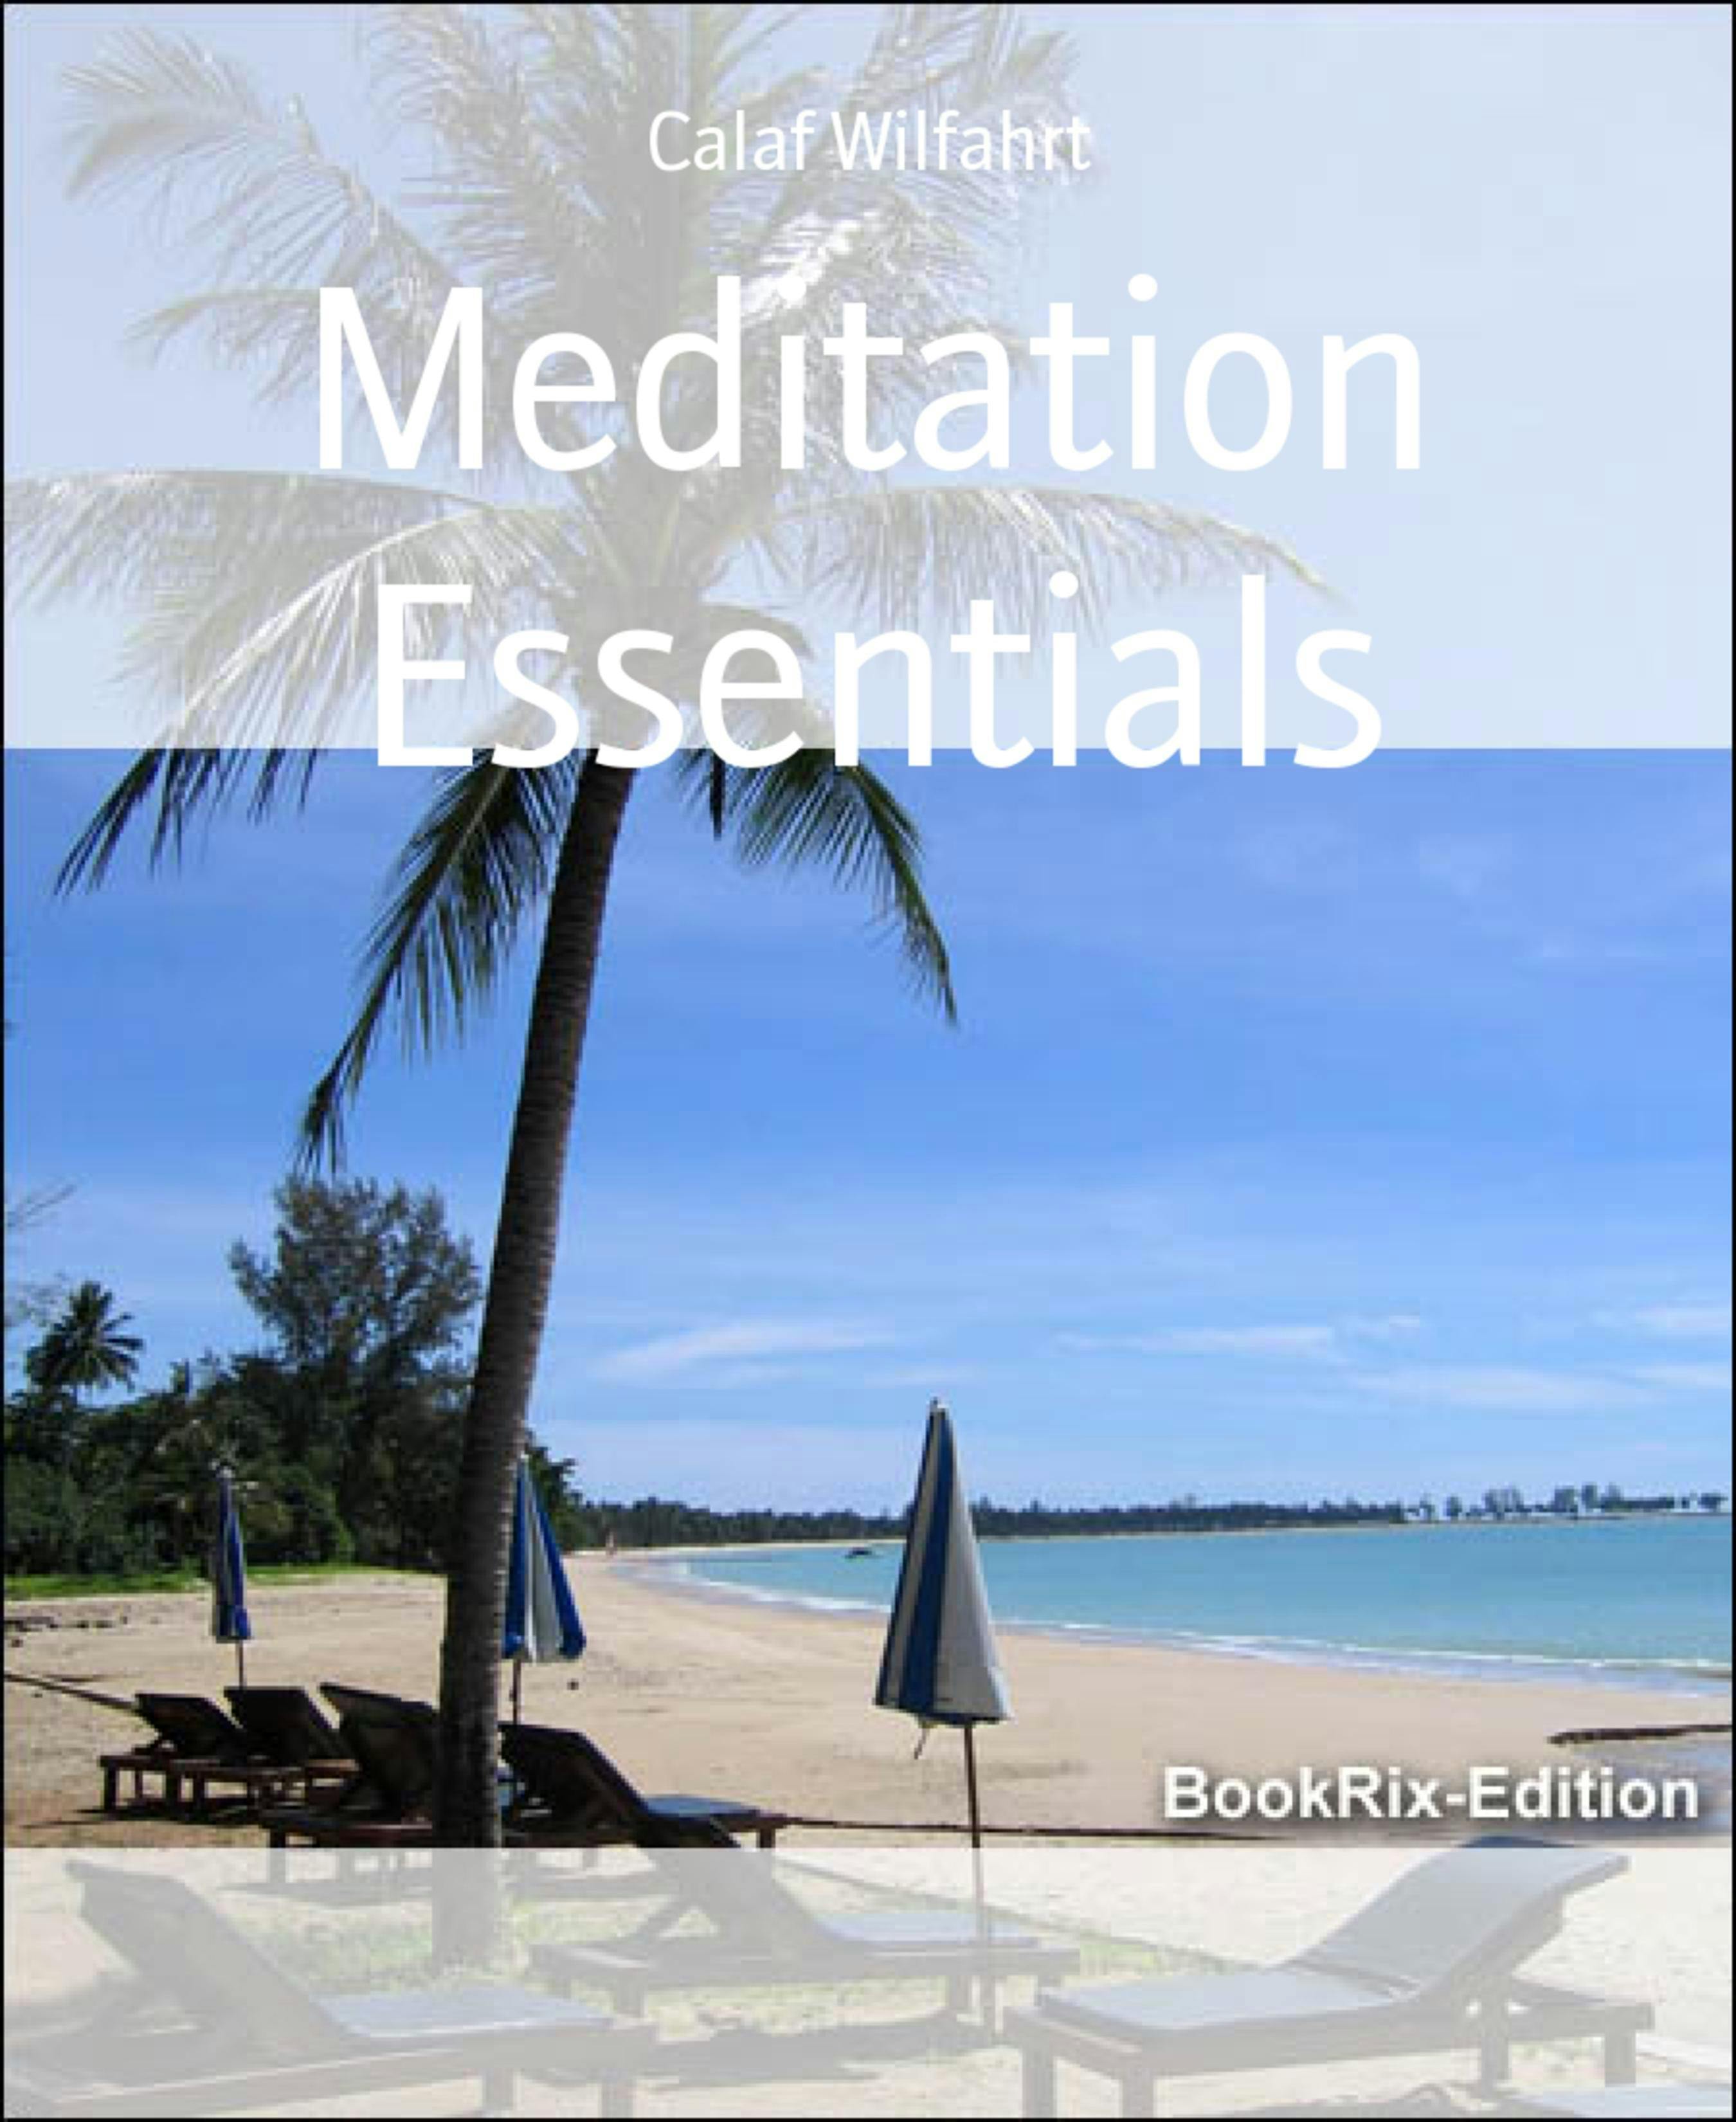 Meditation Essentials - Calaf Wilfahrt